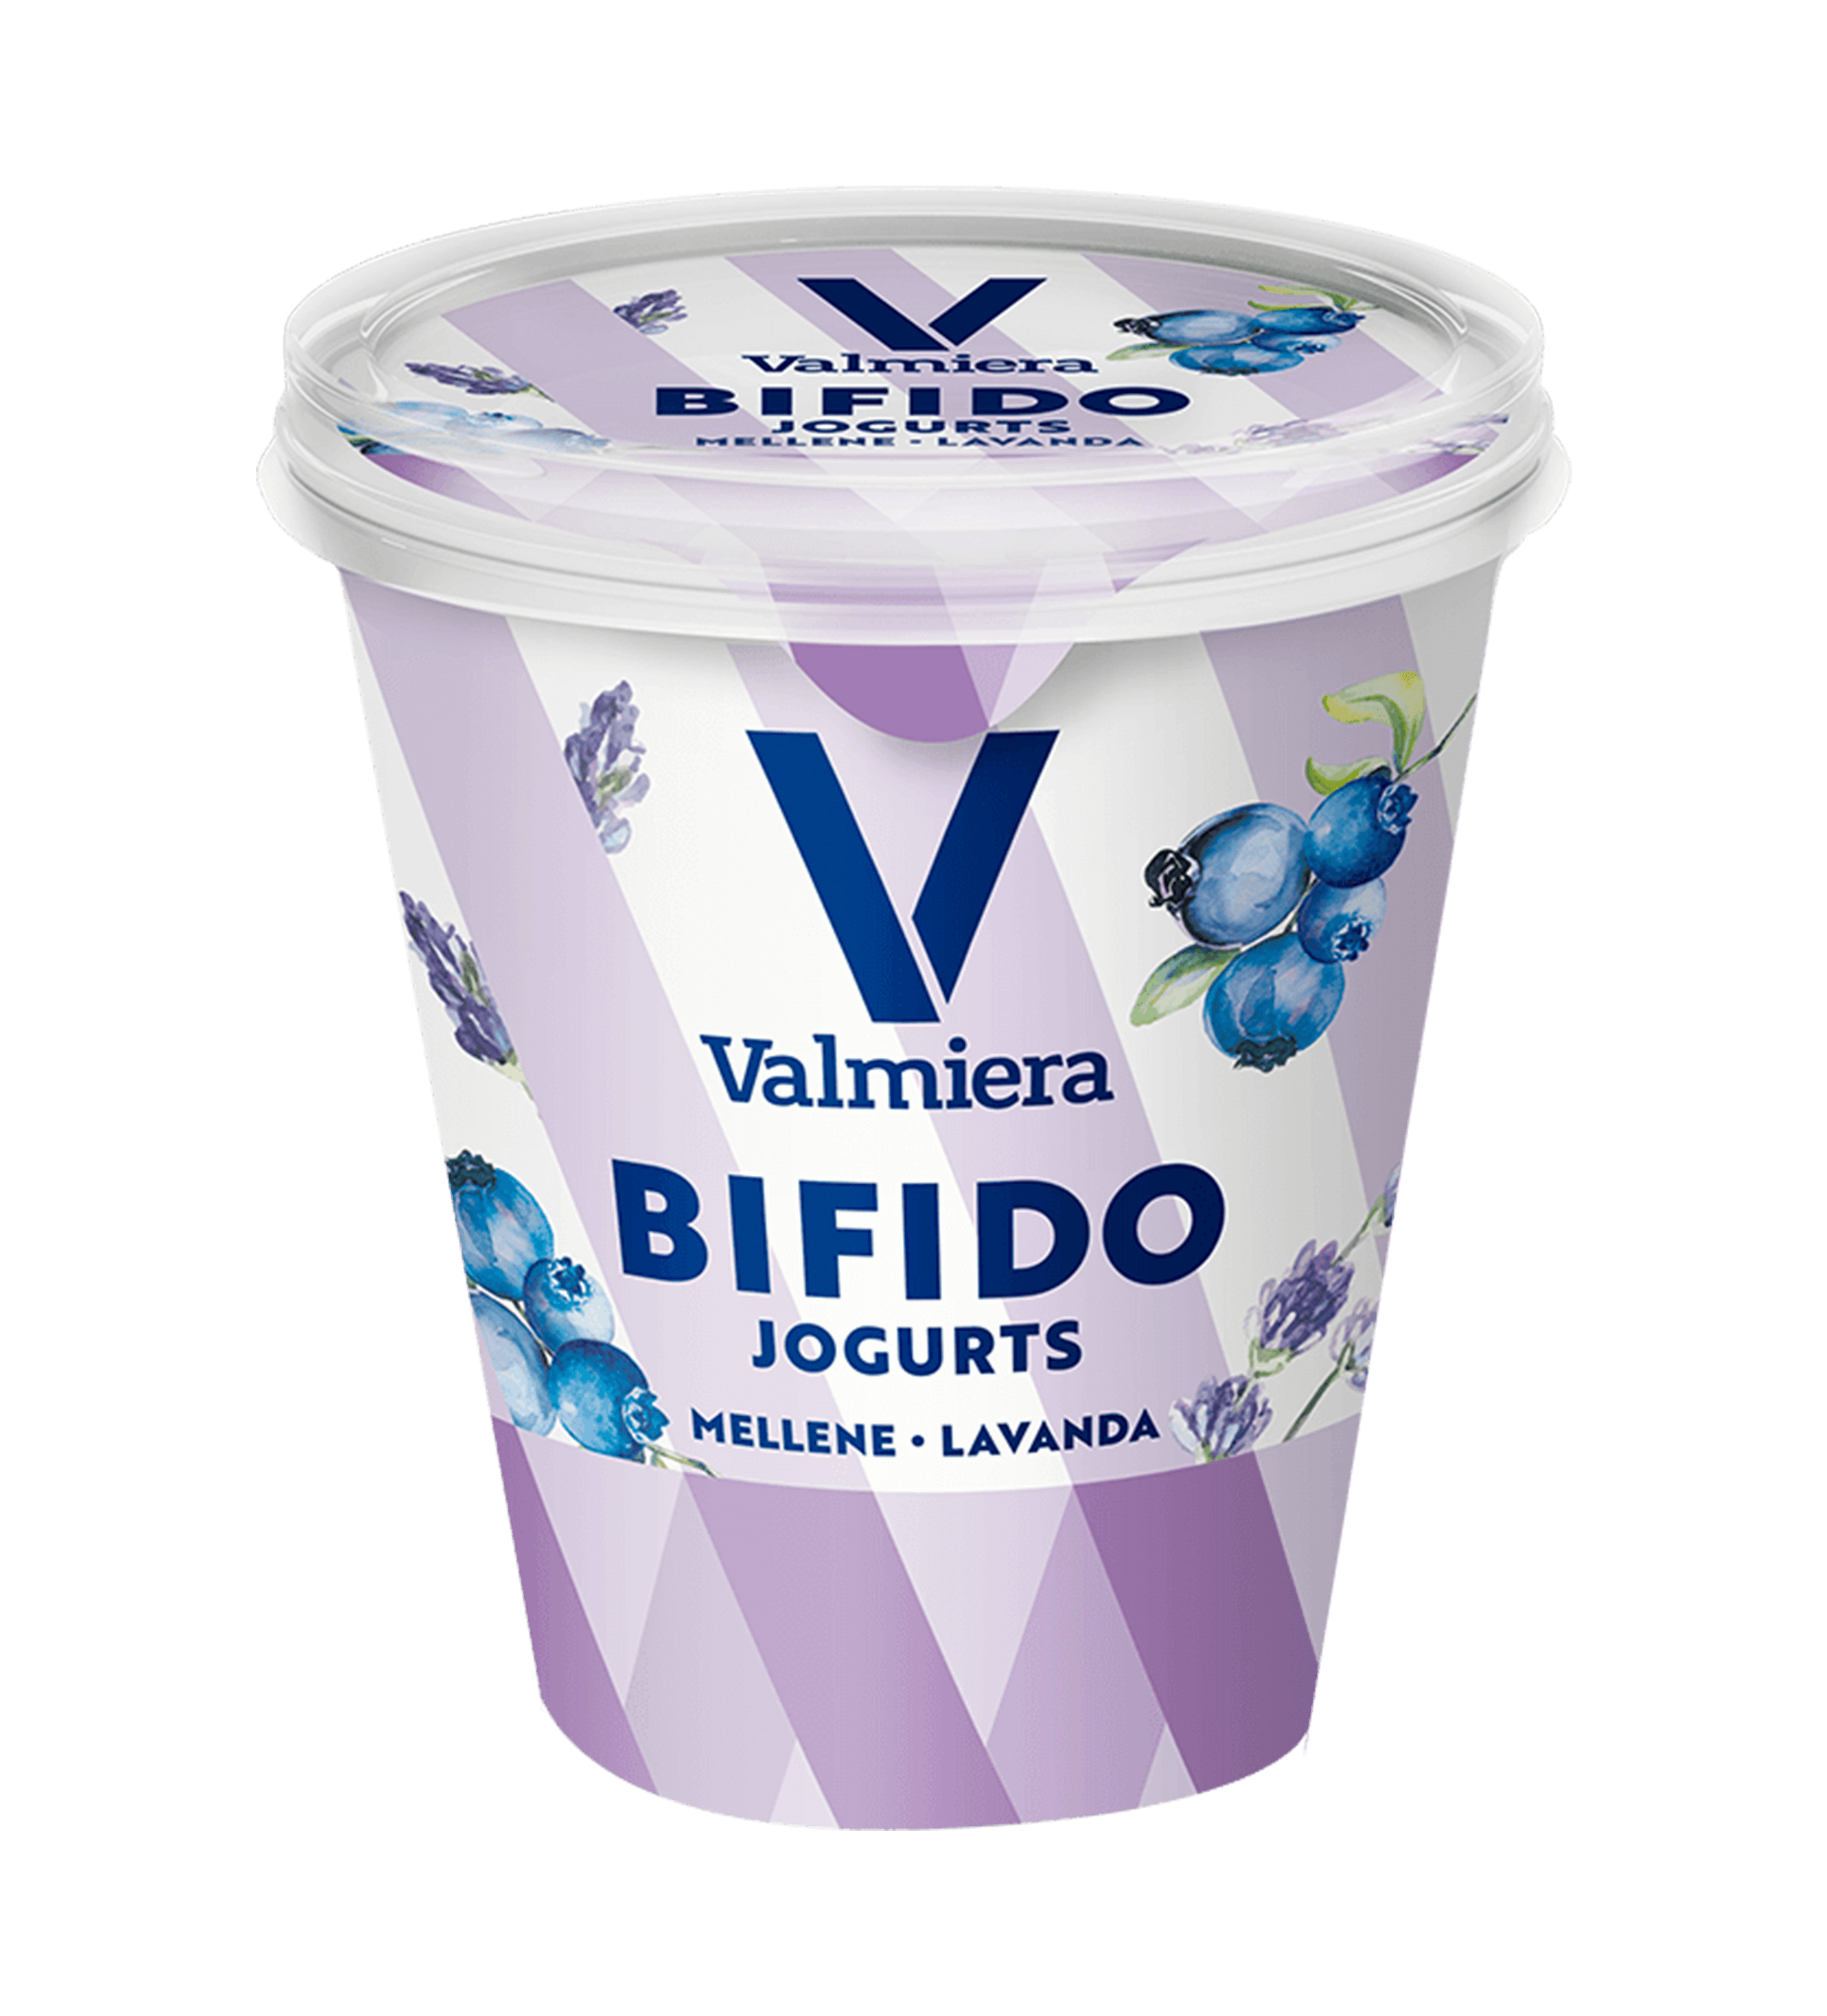 Bifido jogurts mellene – lavanda, 320g